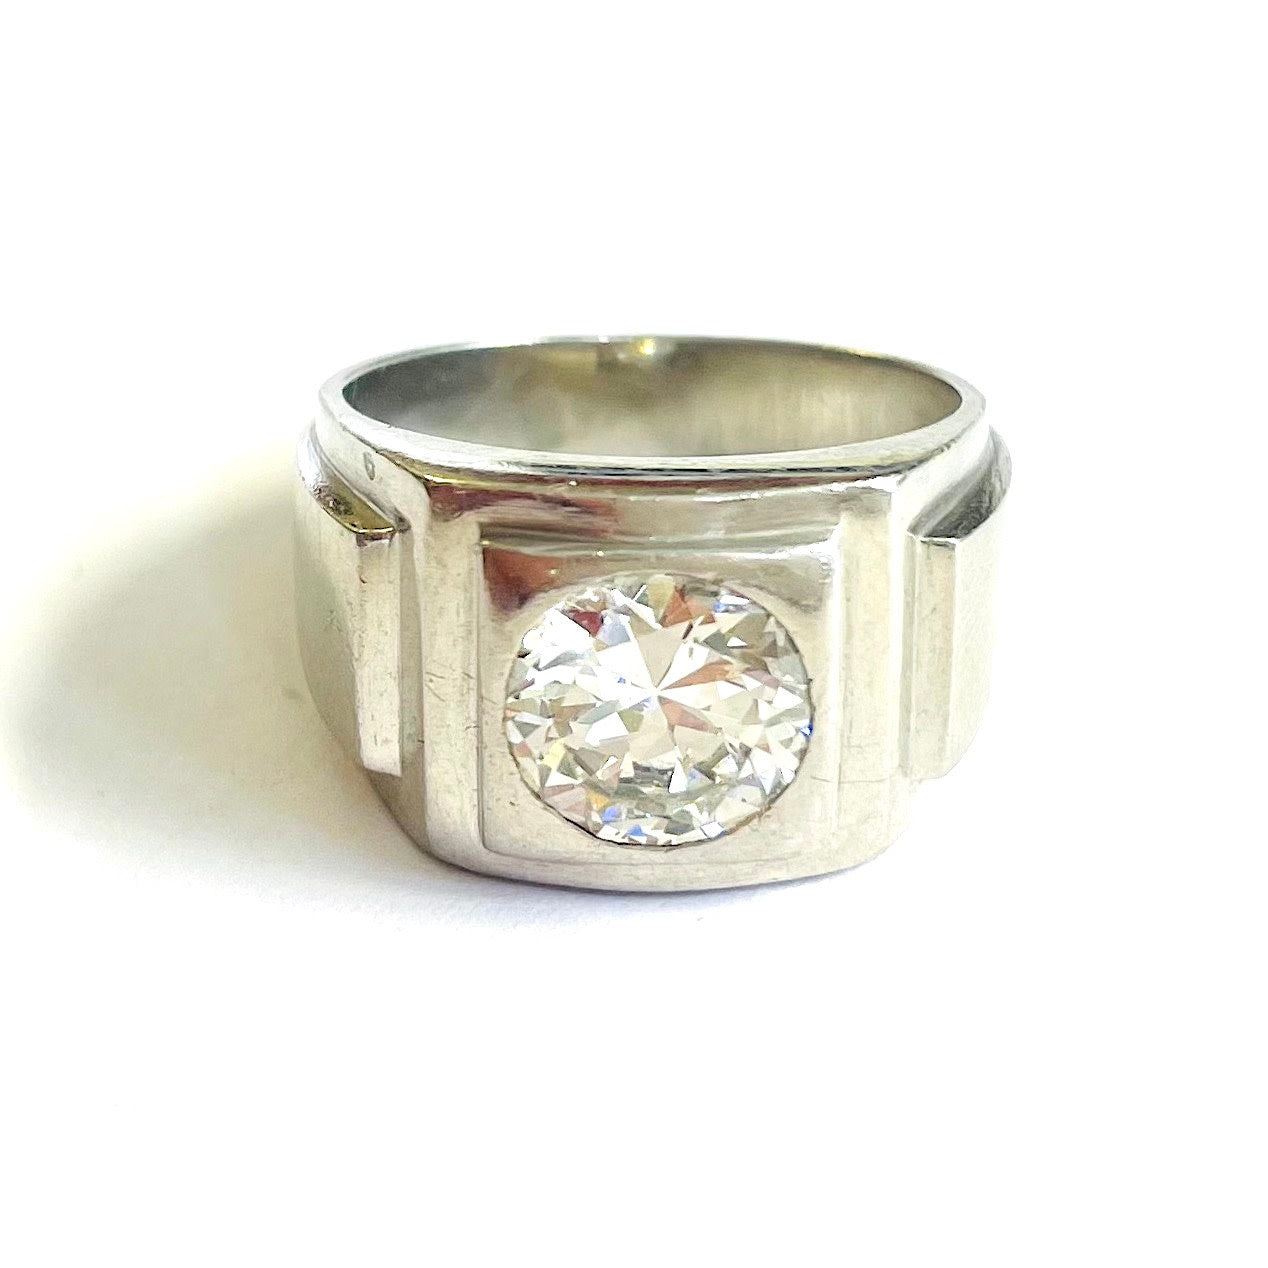 French Art Deco Platinum Diamond Ring front